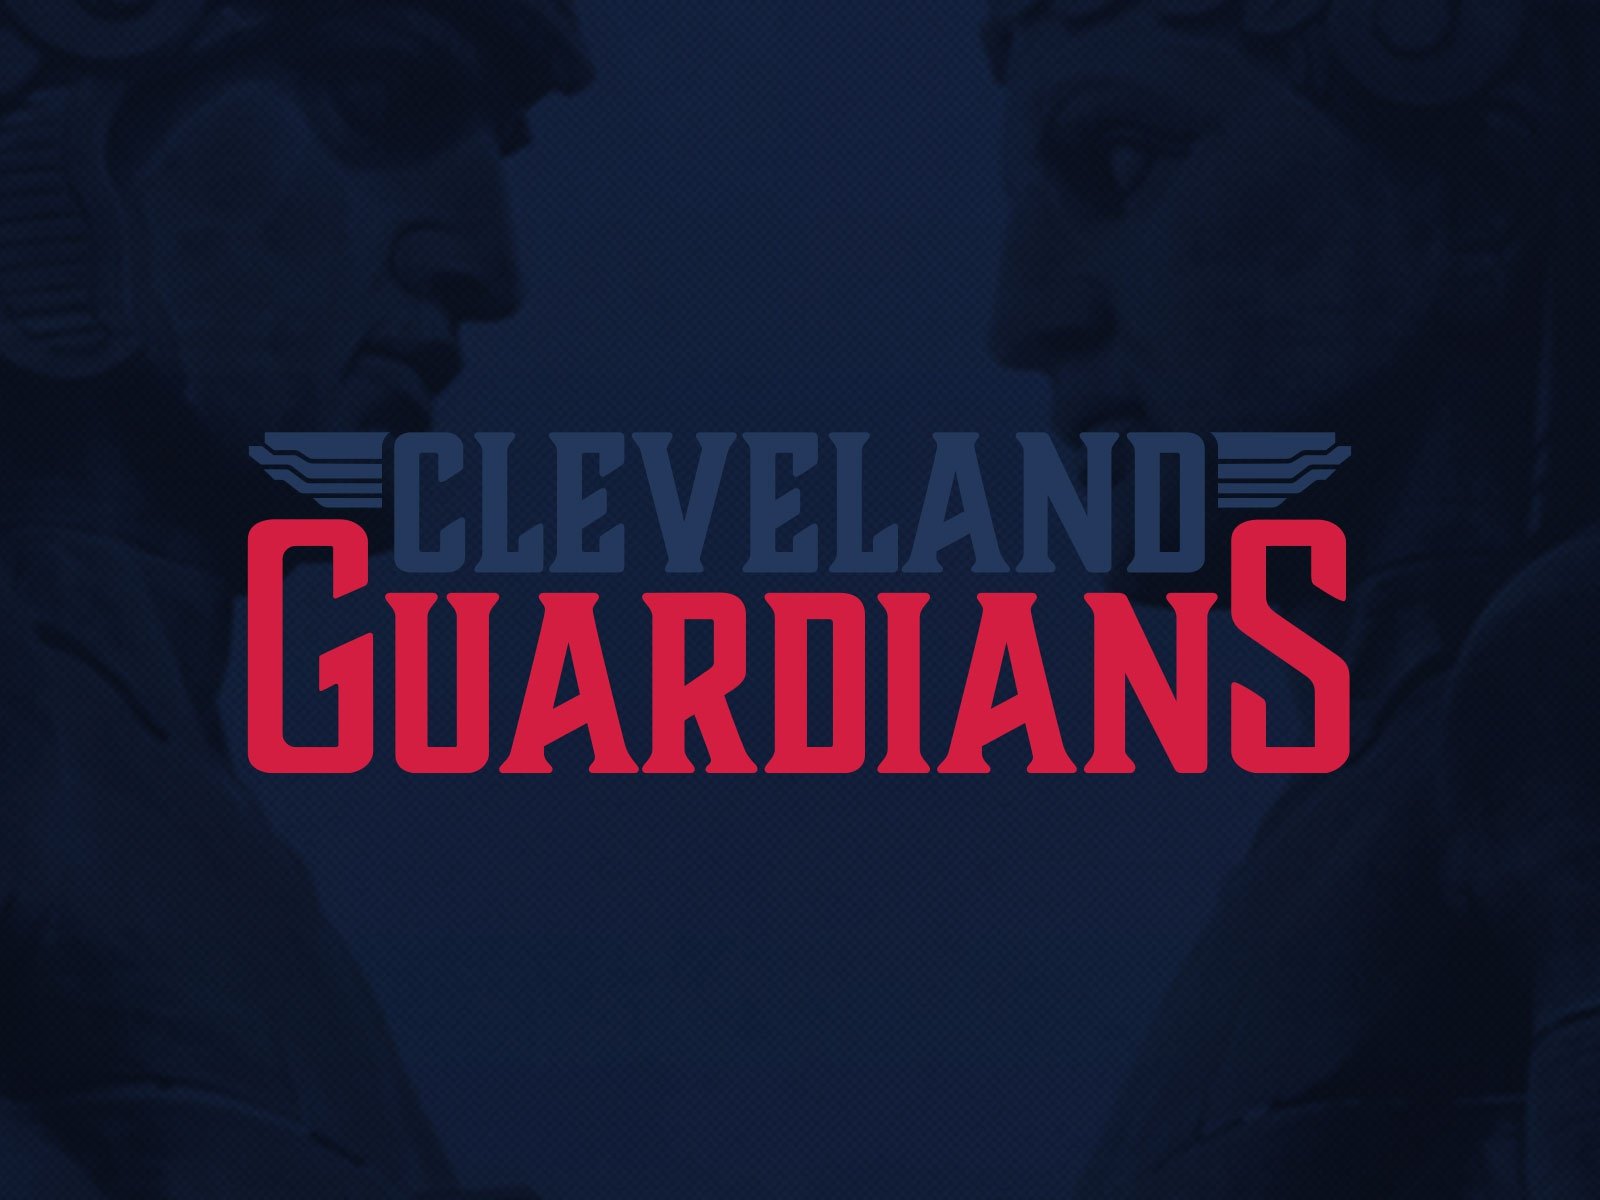 Desktop Cleveland Guardians Wallpaper Explore more American